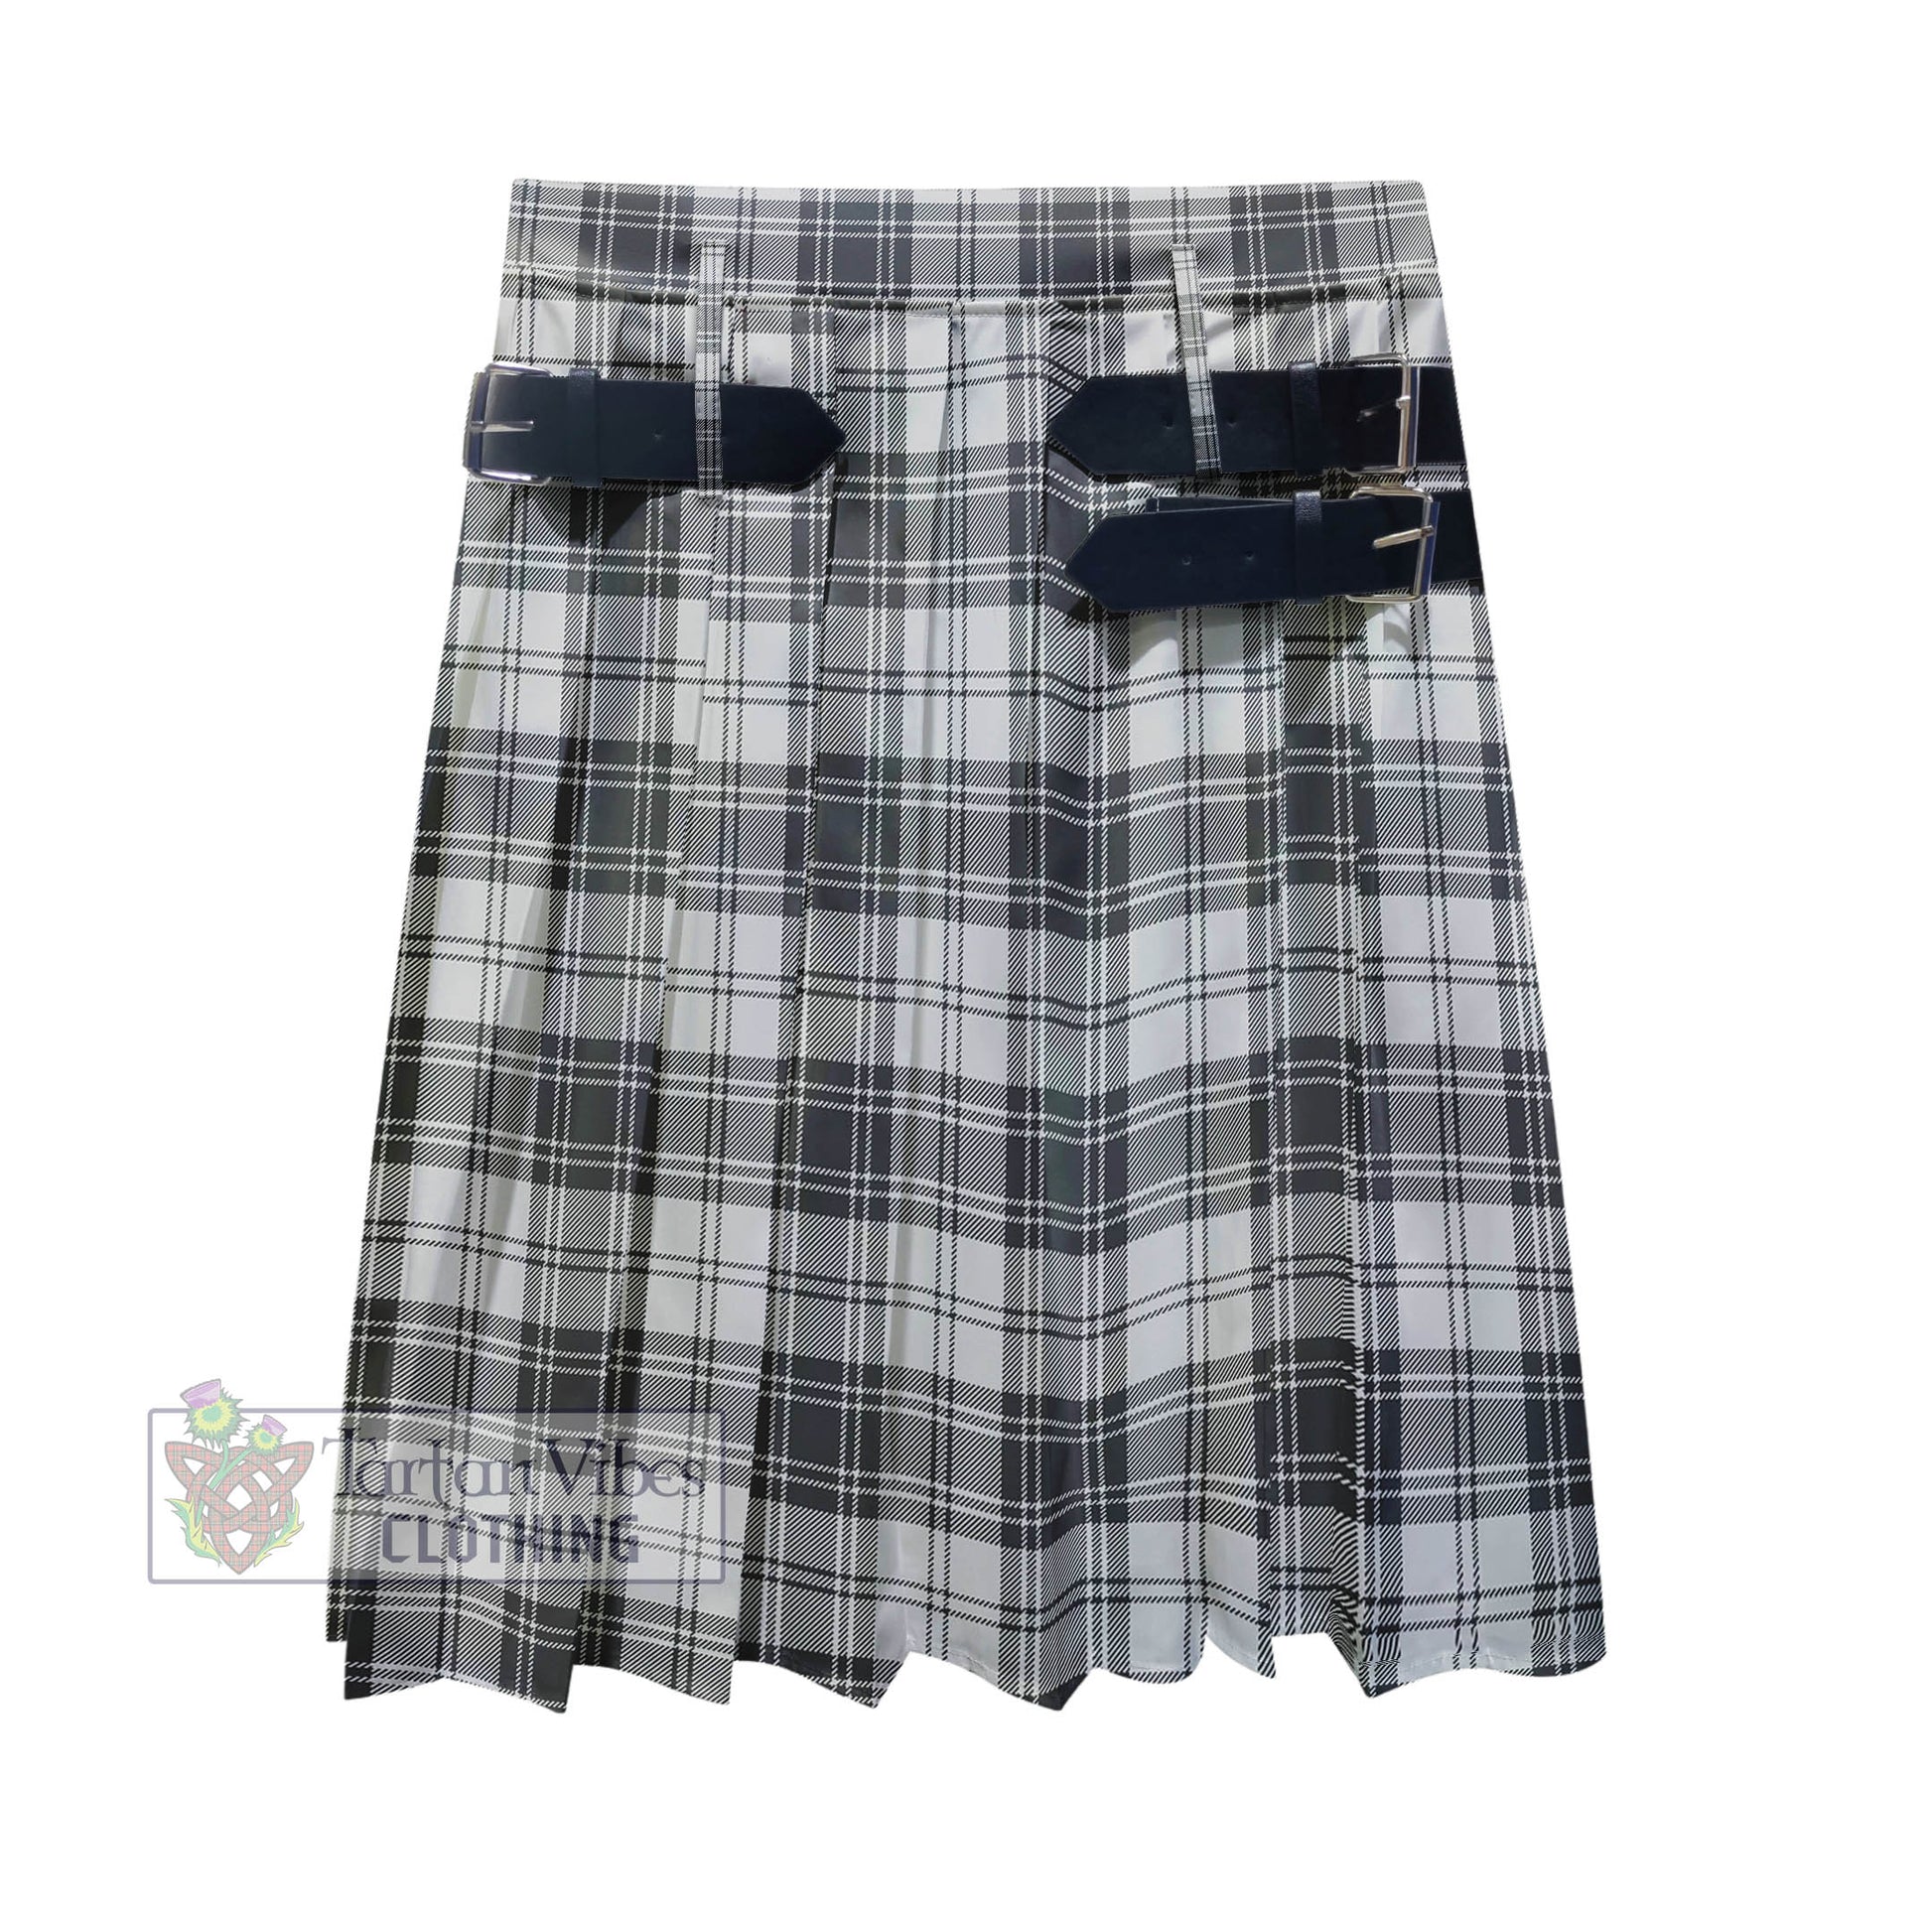 Tartan Vibes Clothing Glen Tartan Men's Pleated Skirt - Fashion Casual Retro Scottish Style